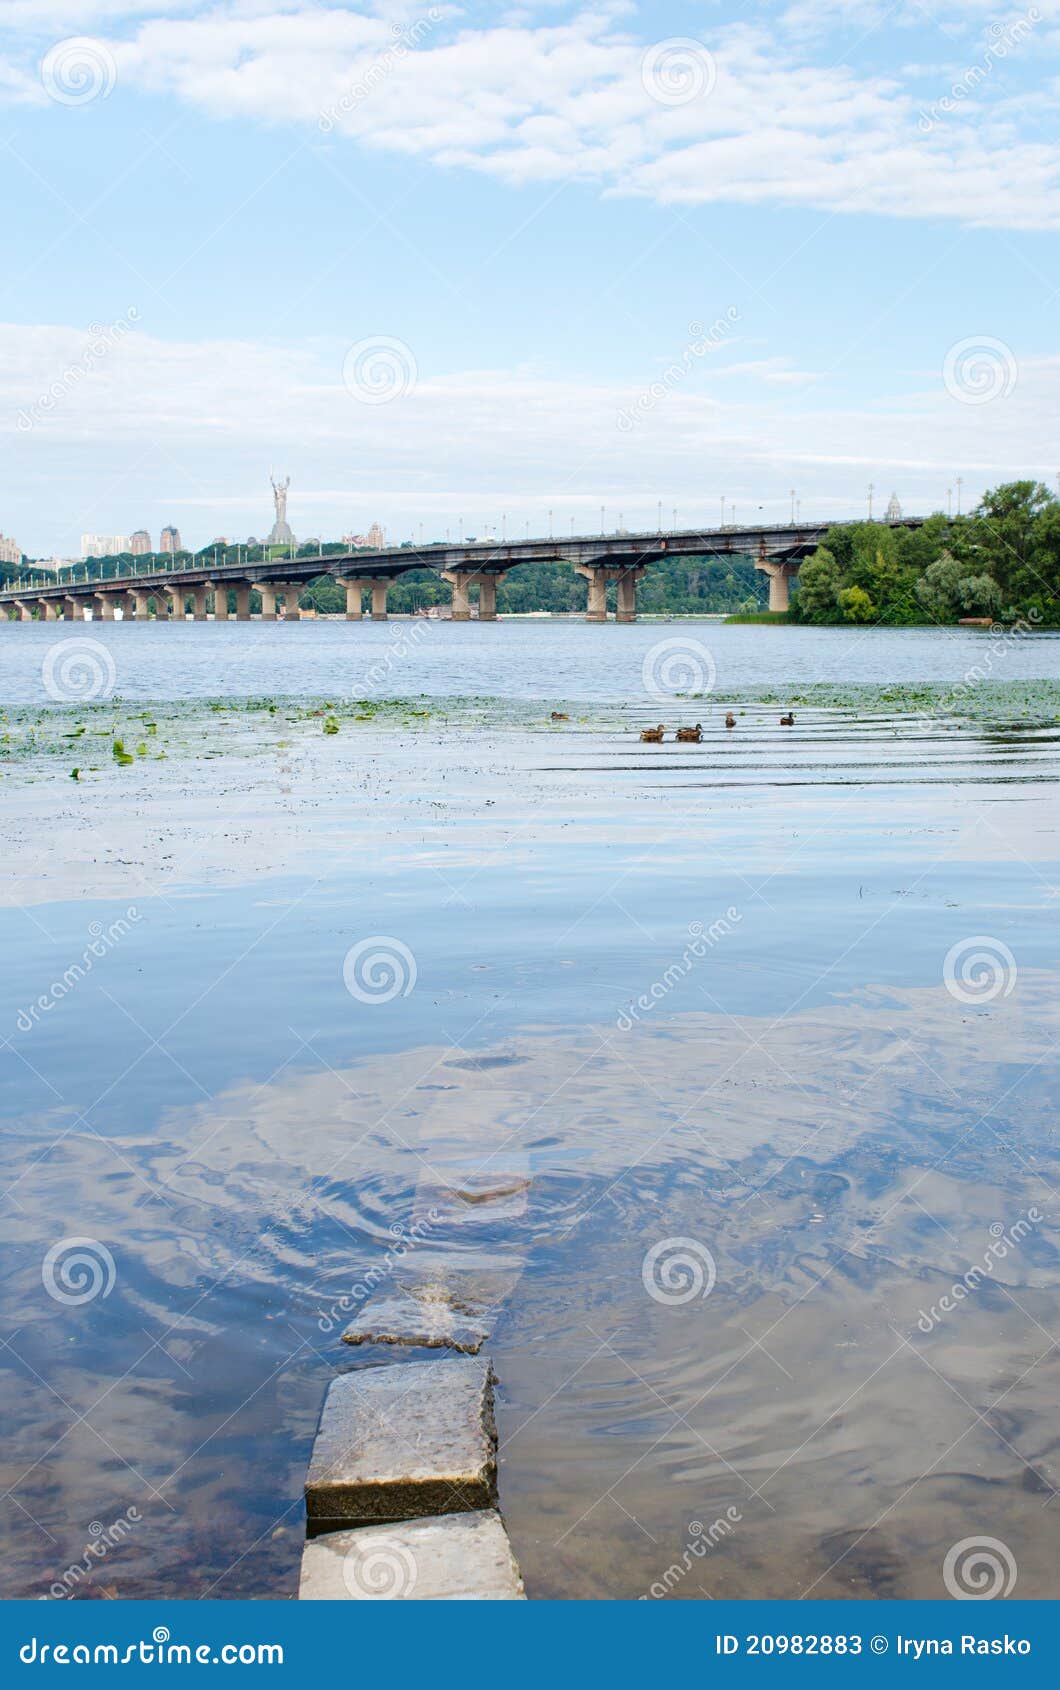 ukraine, kiev, paton bridge over dnipro river